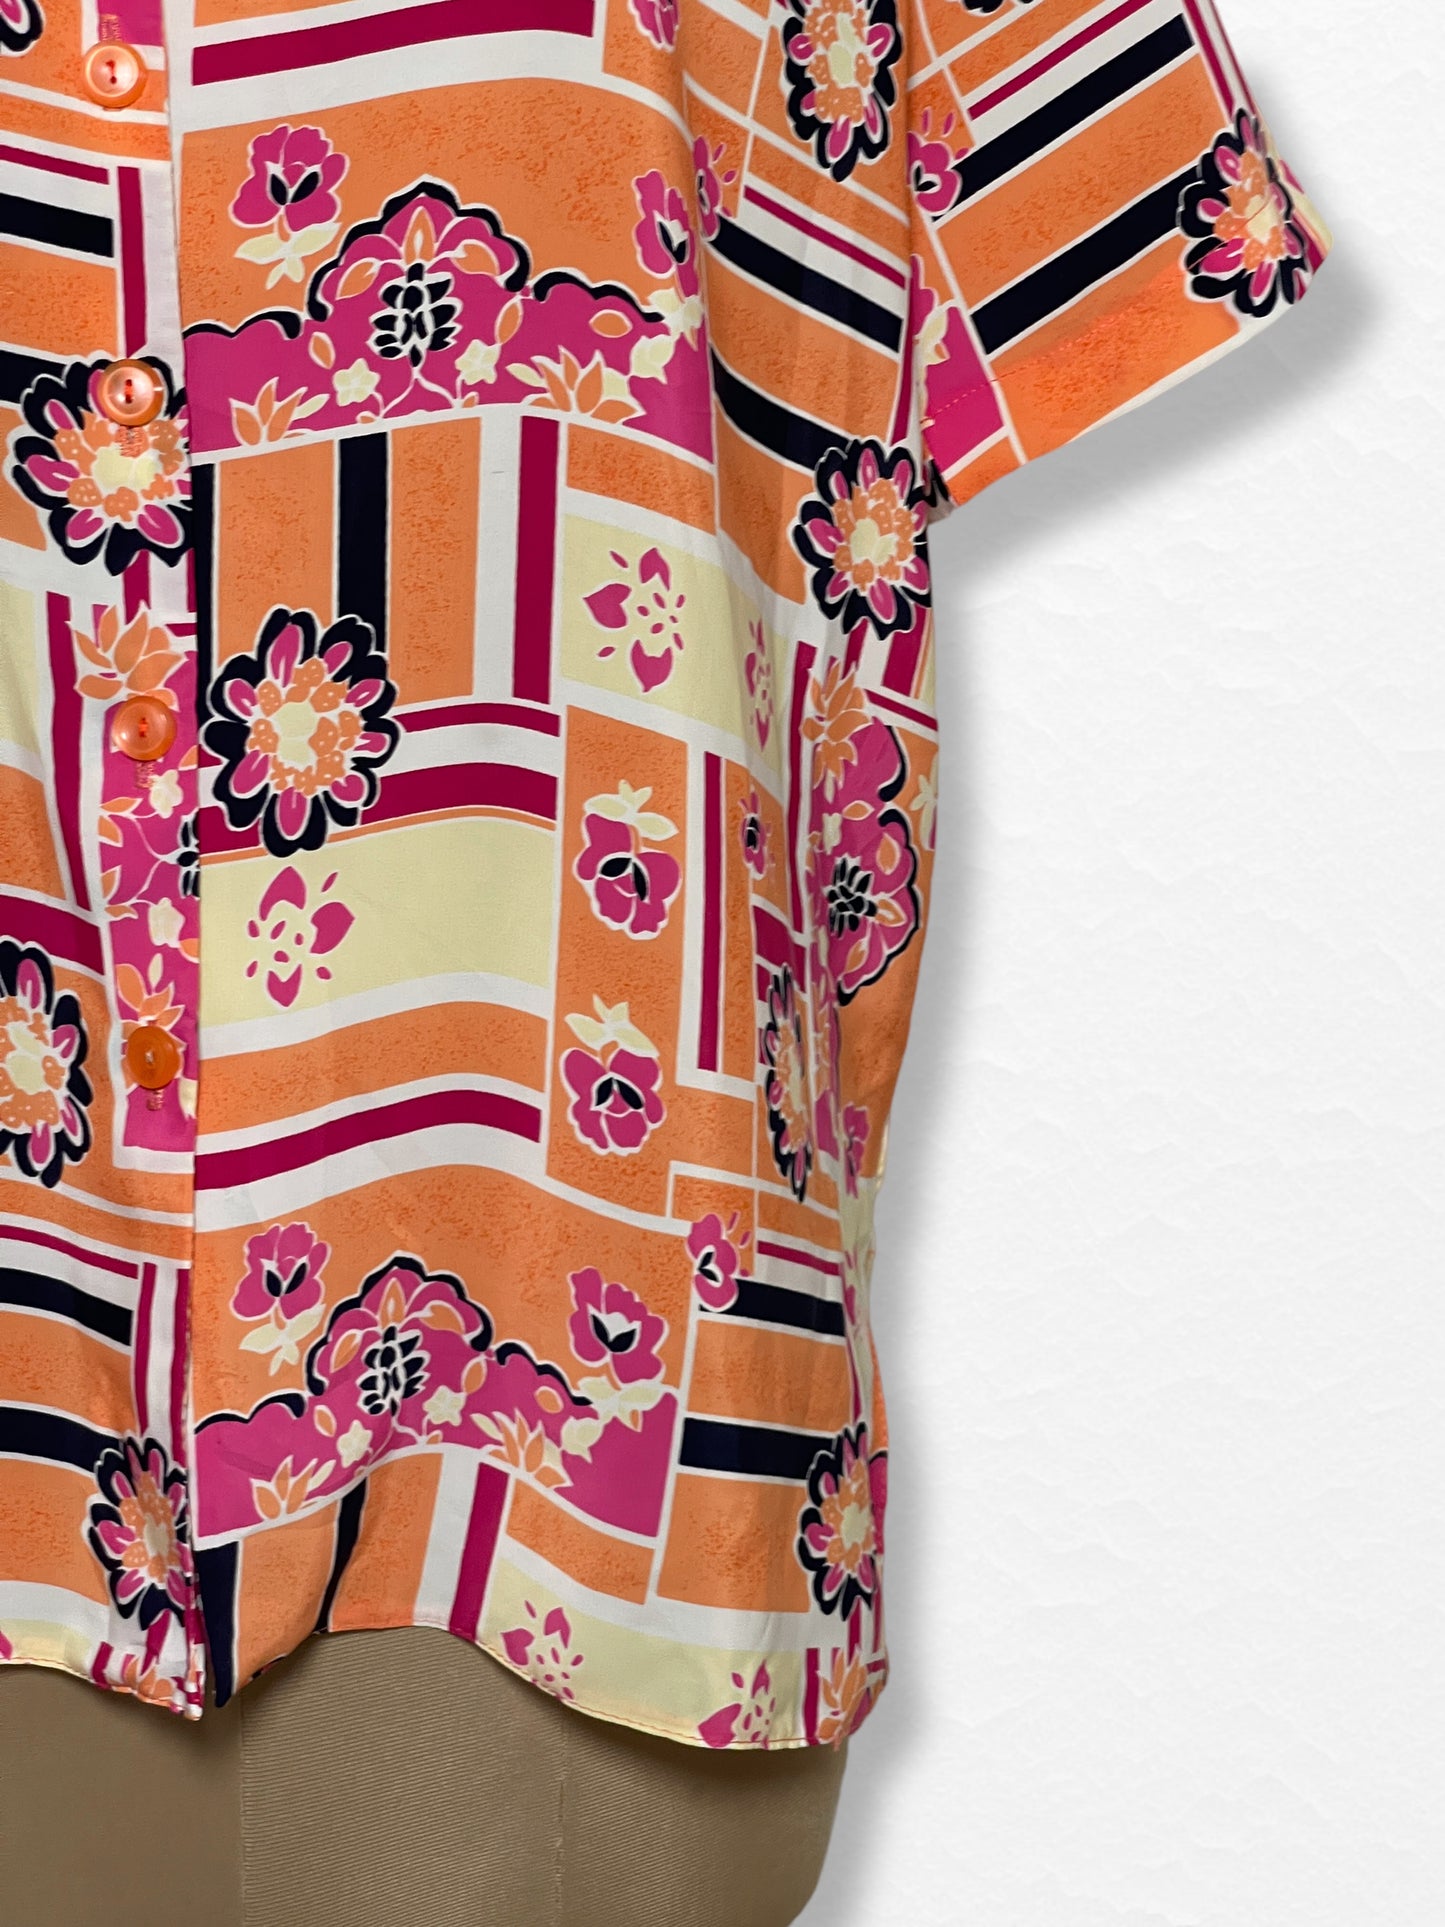 Women's Hawaii Shirt 3876